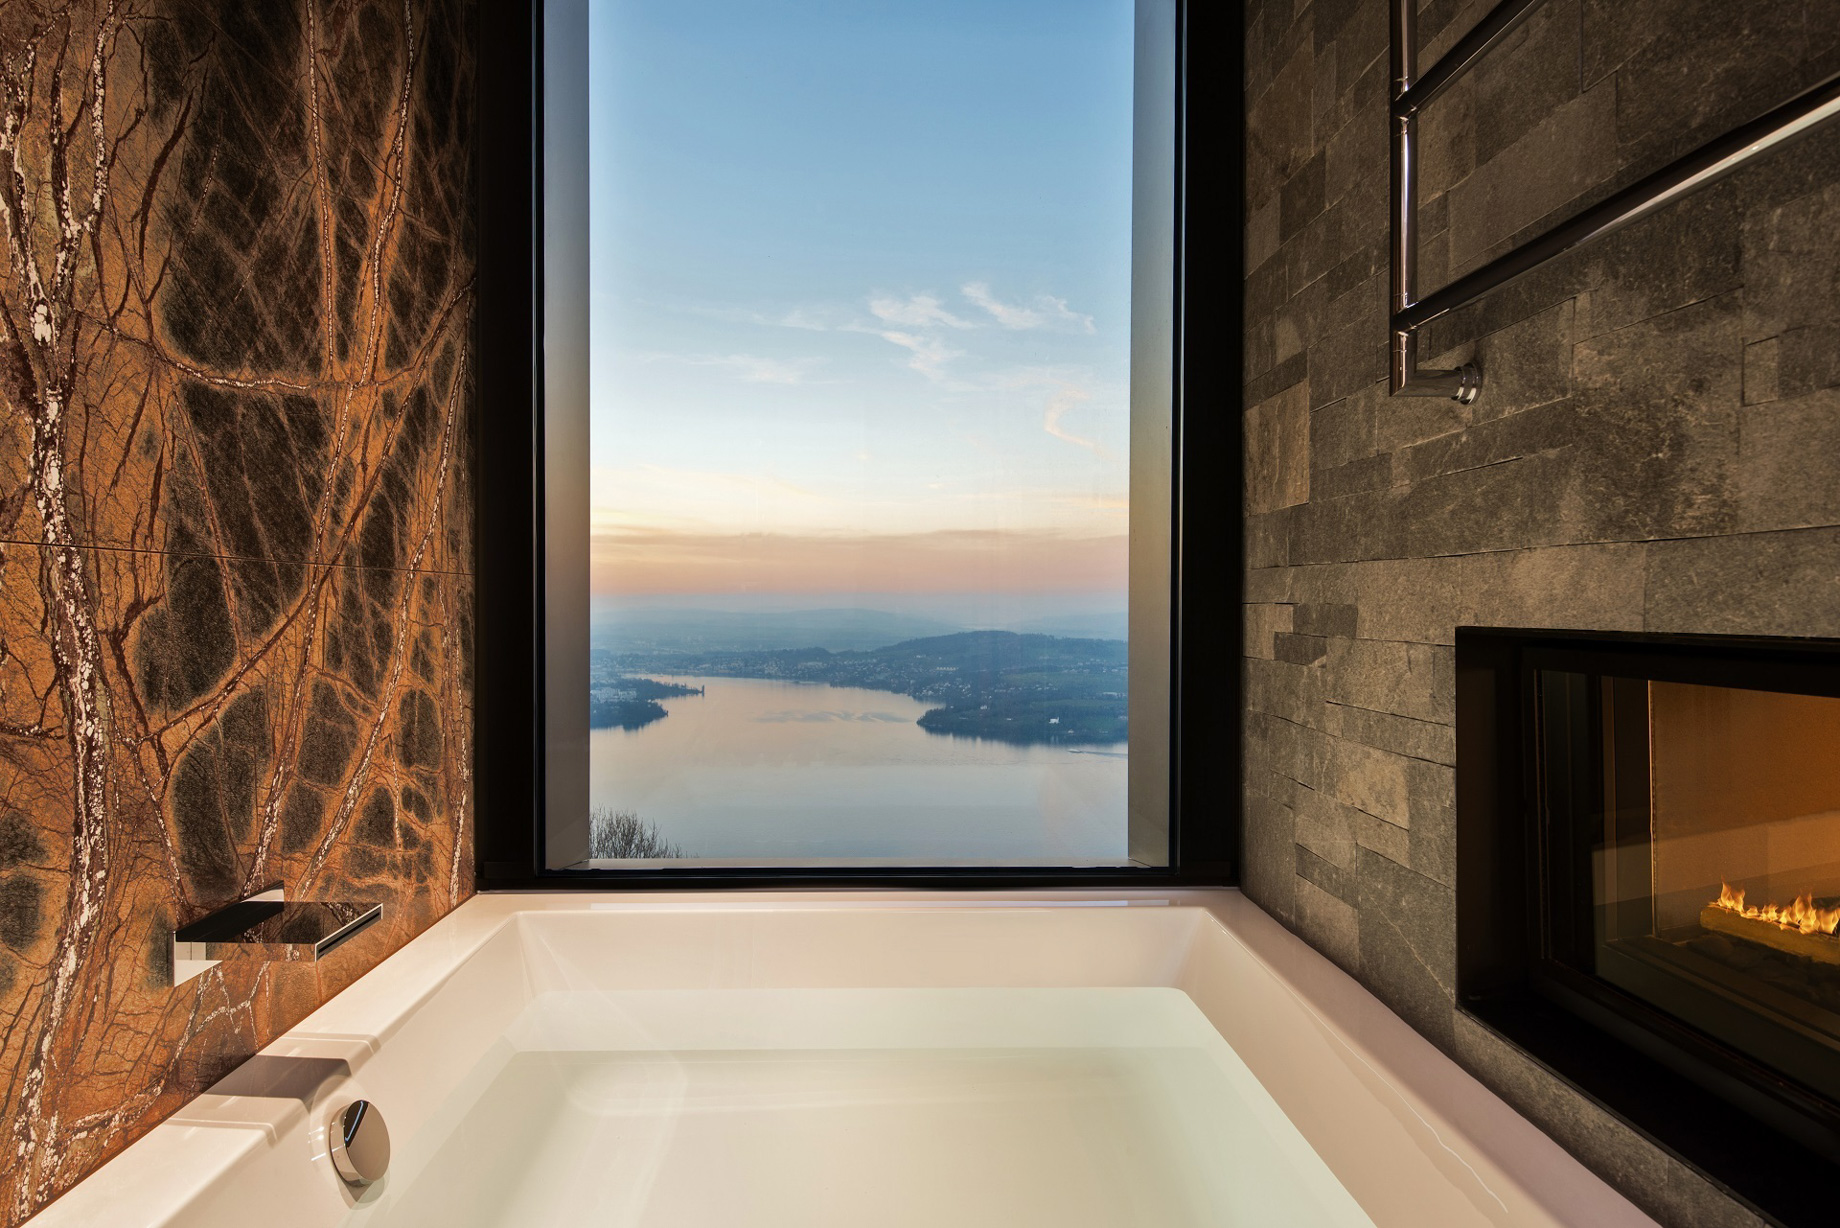 Burgenstock Hotel & Alpine Spa - Obburgen, Switzerland - Spa Suite Bathroom Tub View